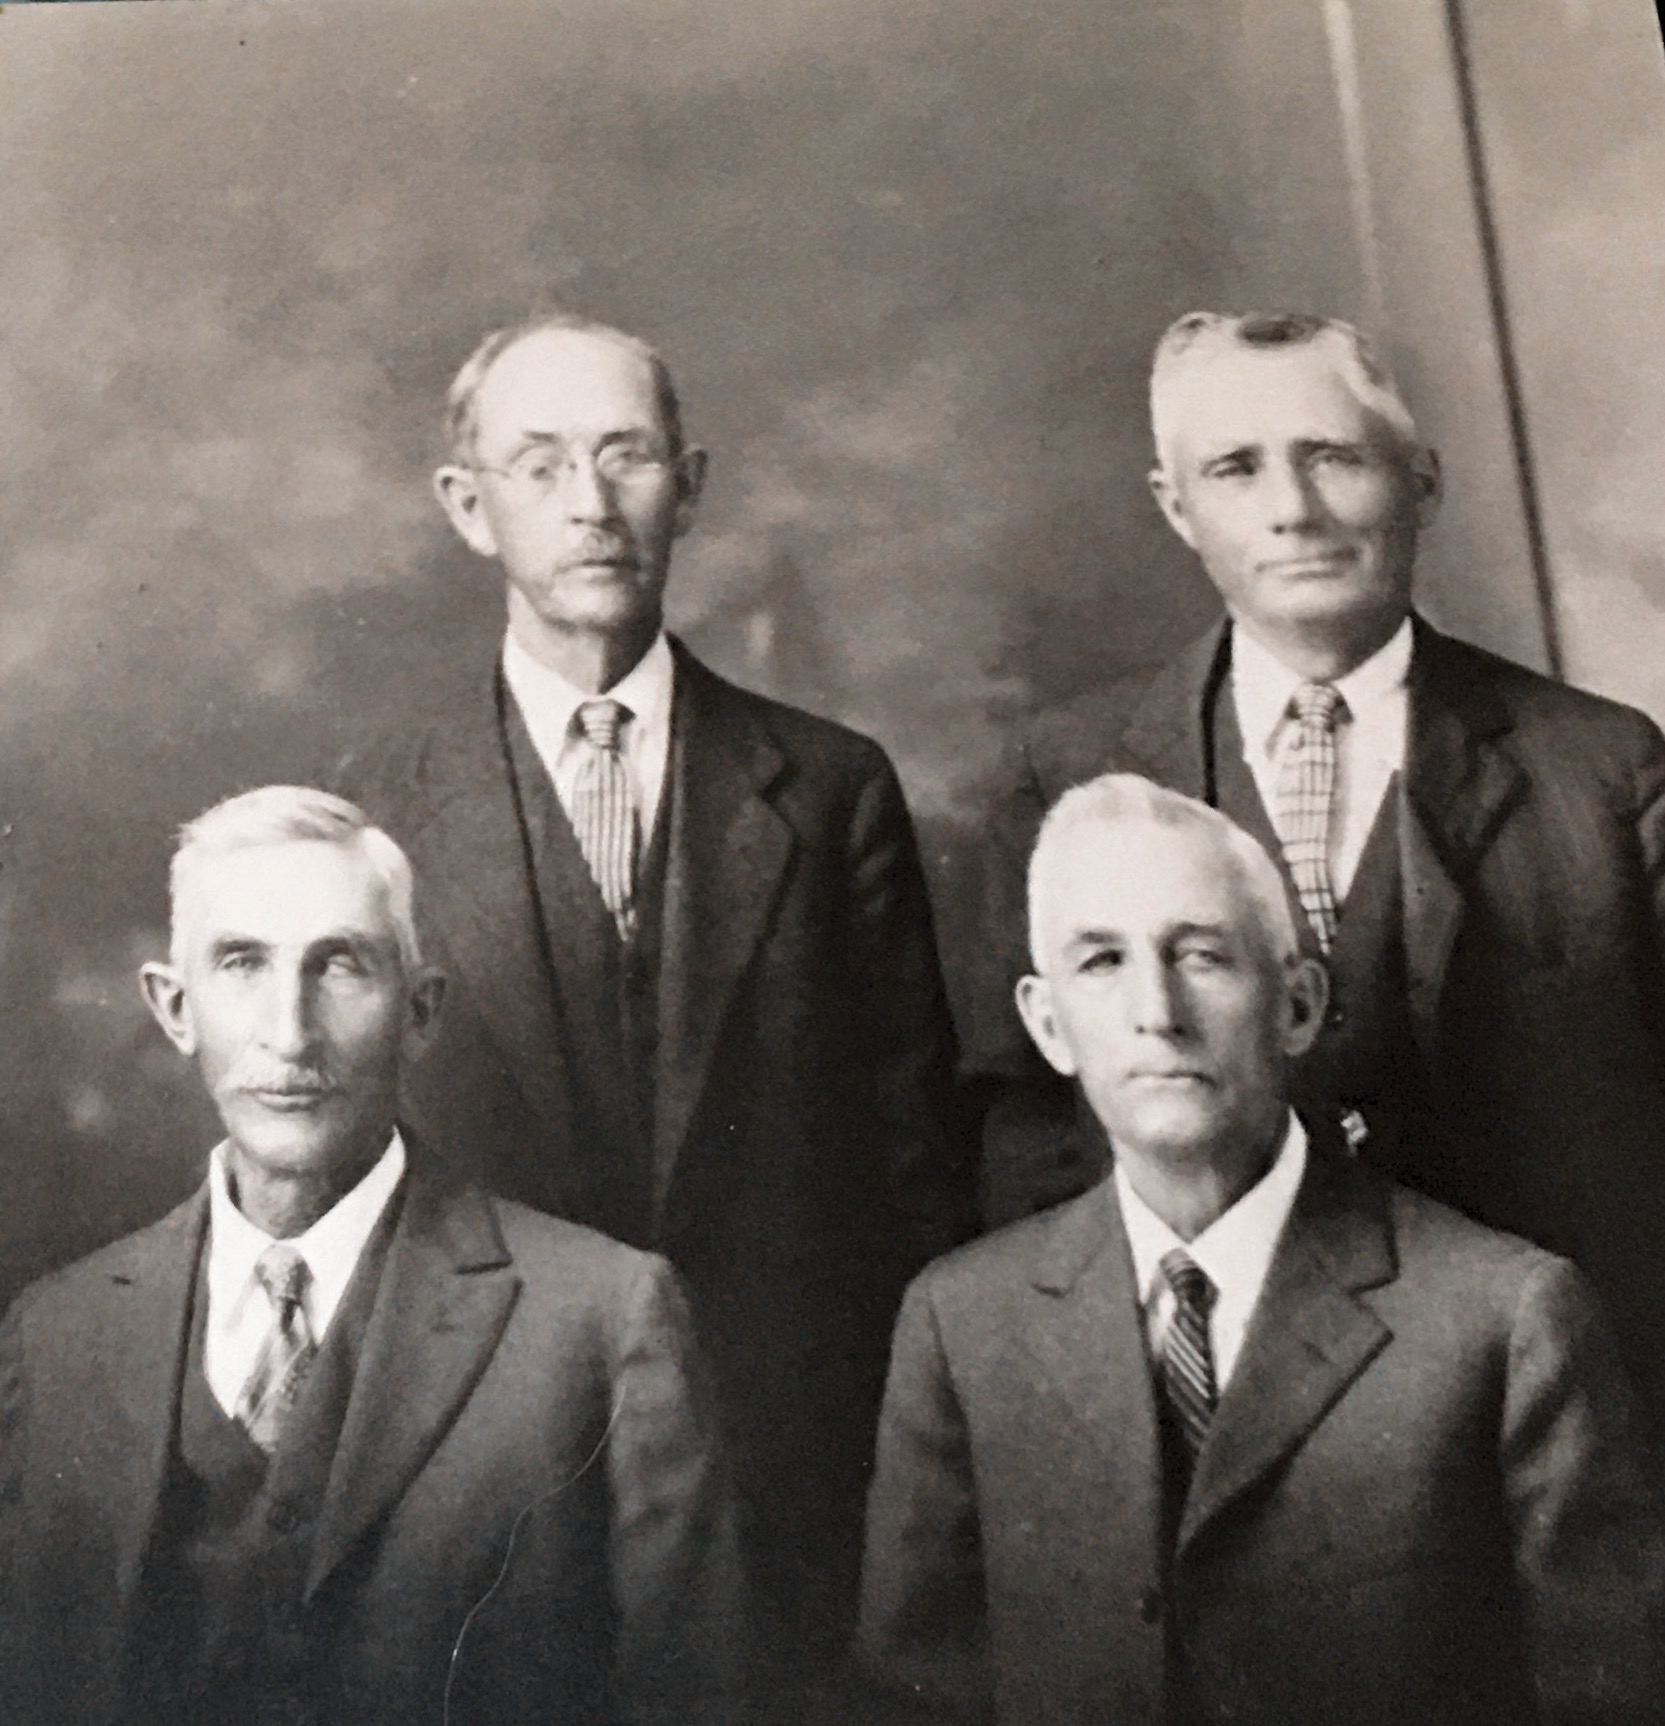 Brothers - bottom row left side my Great-grandfather Bill
Picture taken in Fairbury, Nebraska
Bert Howard born 1862 in Ohio